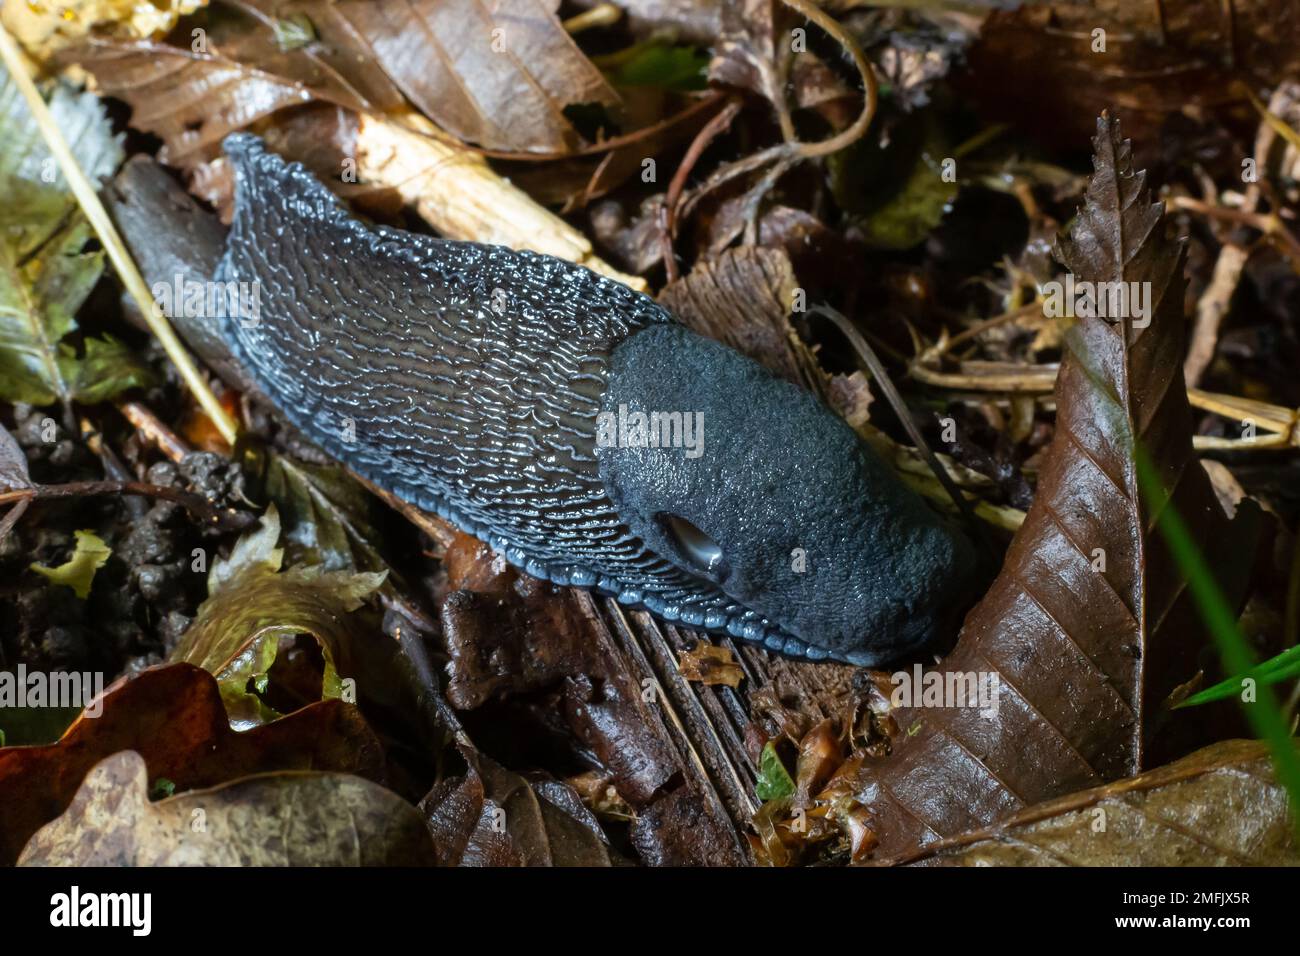 Black slug - Arion vulgaris - in it's natural environment. Stock Photo